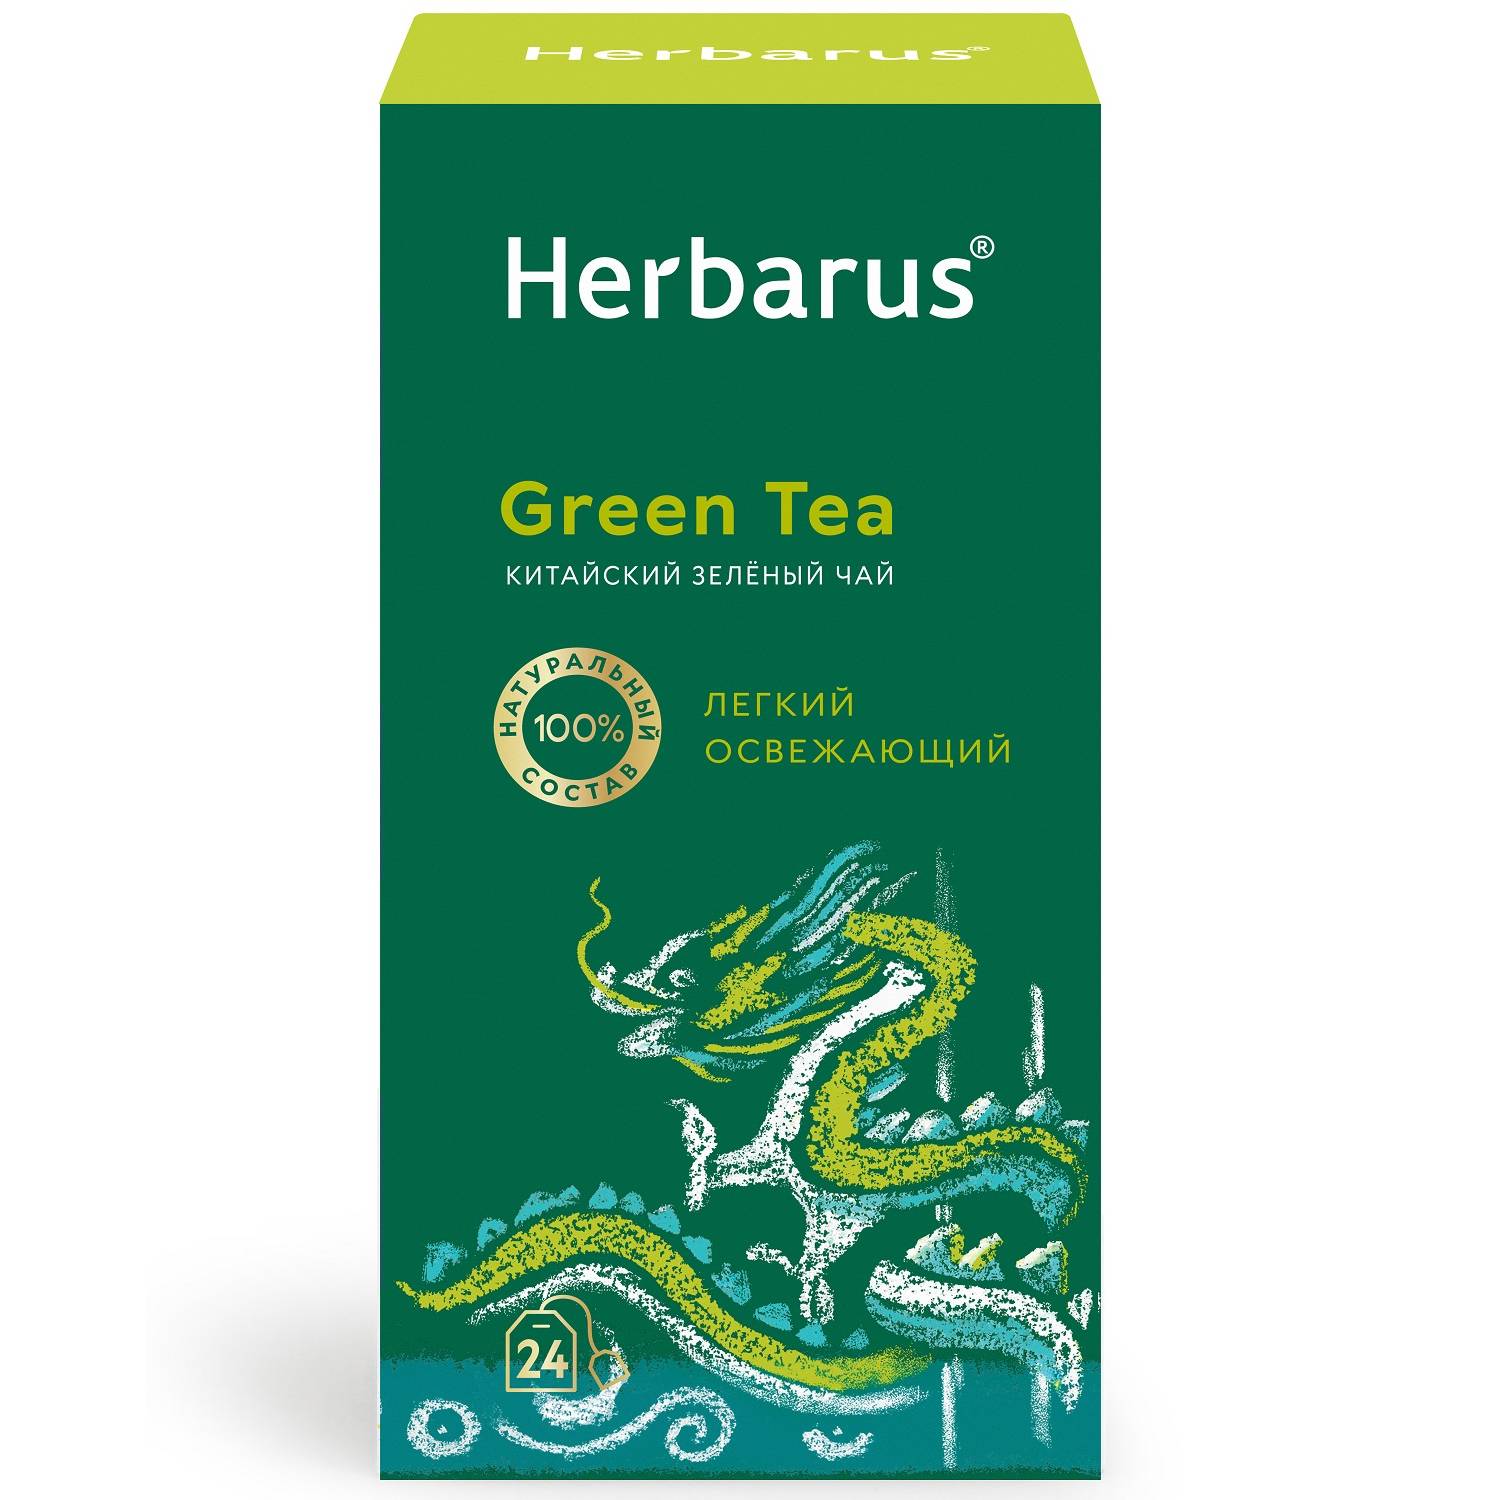 Herbarus Чай зеленый китайский Green Tea, 24 пакетика х 2 г (Herbarus, Классический чай) herbarus чай черный с добавками сладкий восточный 24 х 2 г herbarus чай с добавками